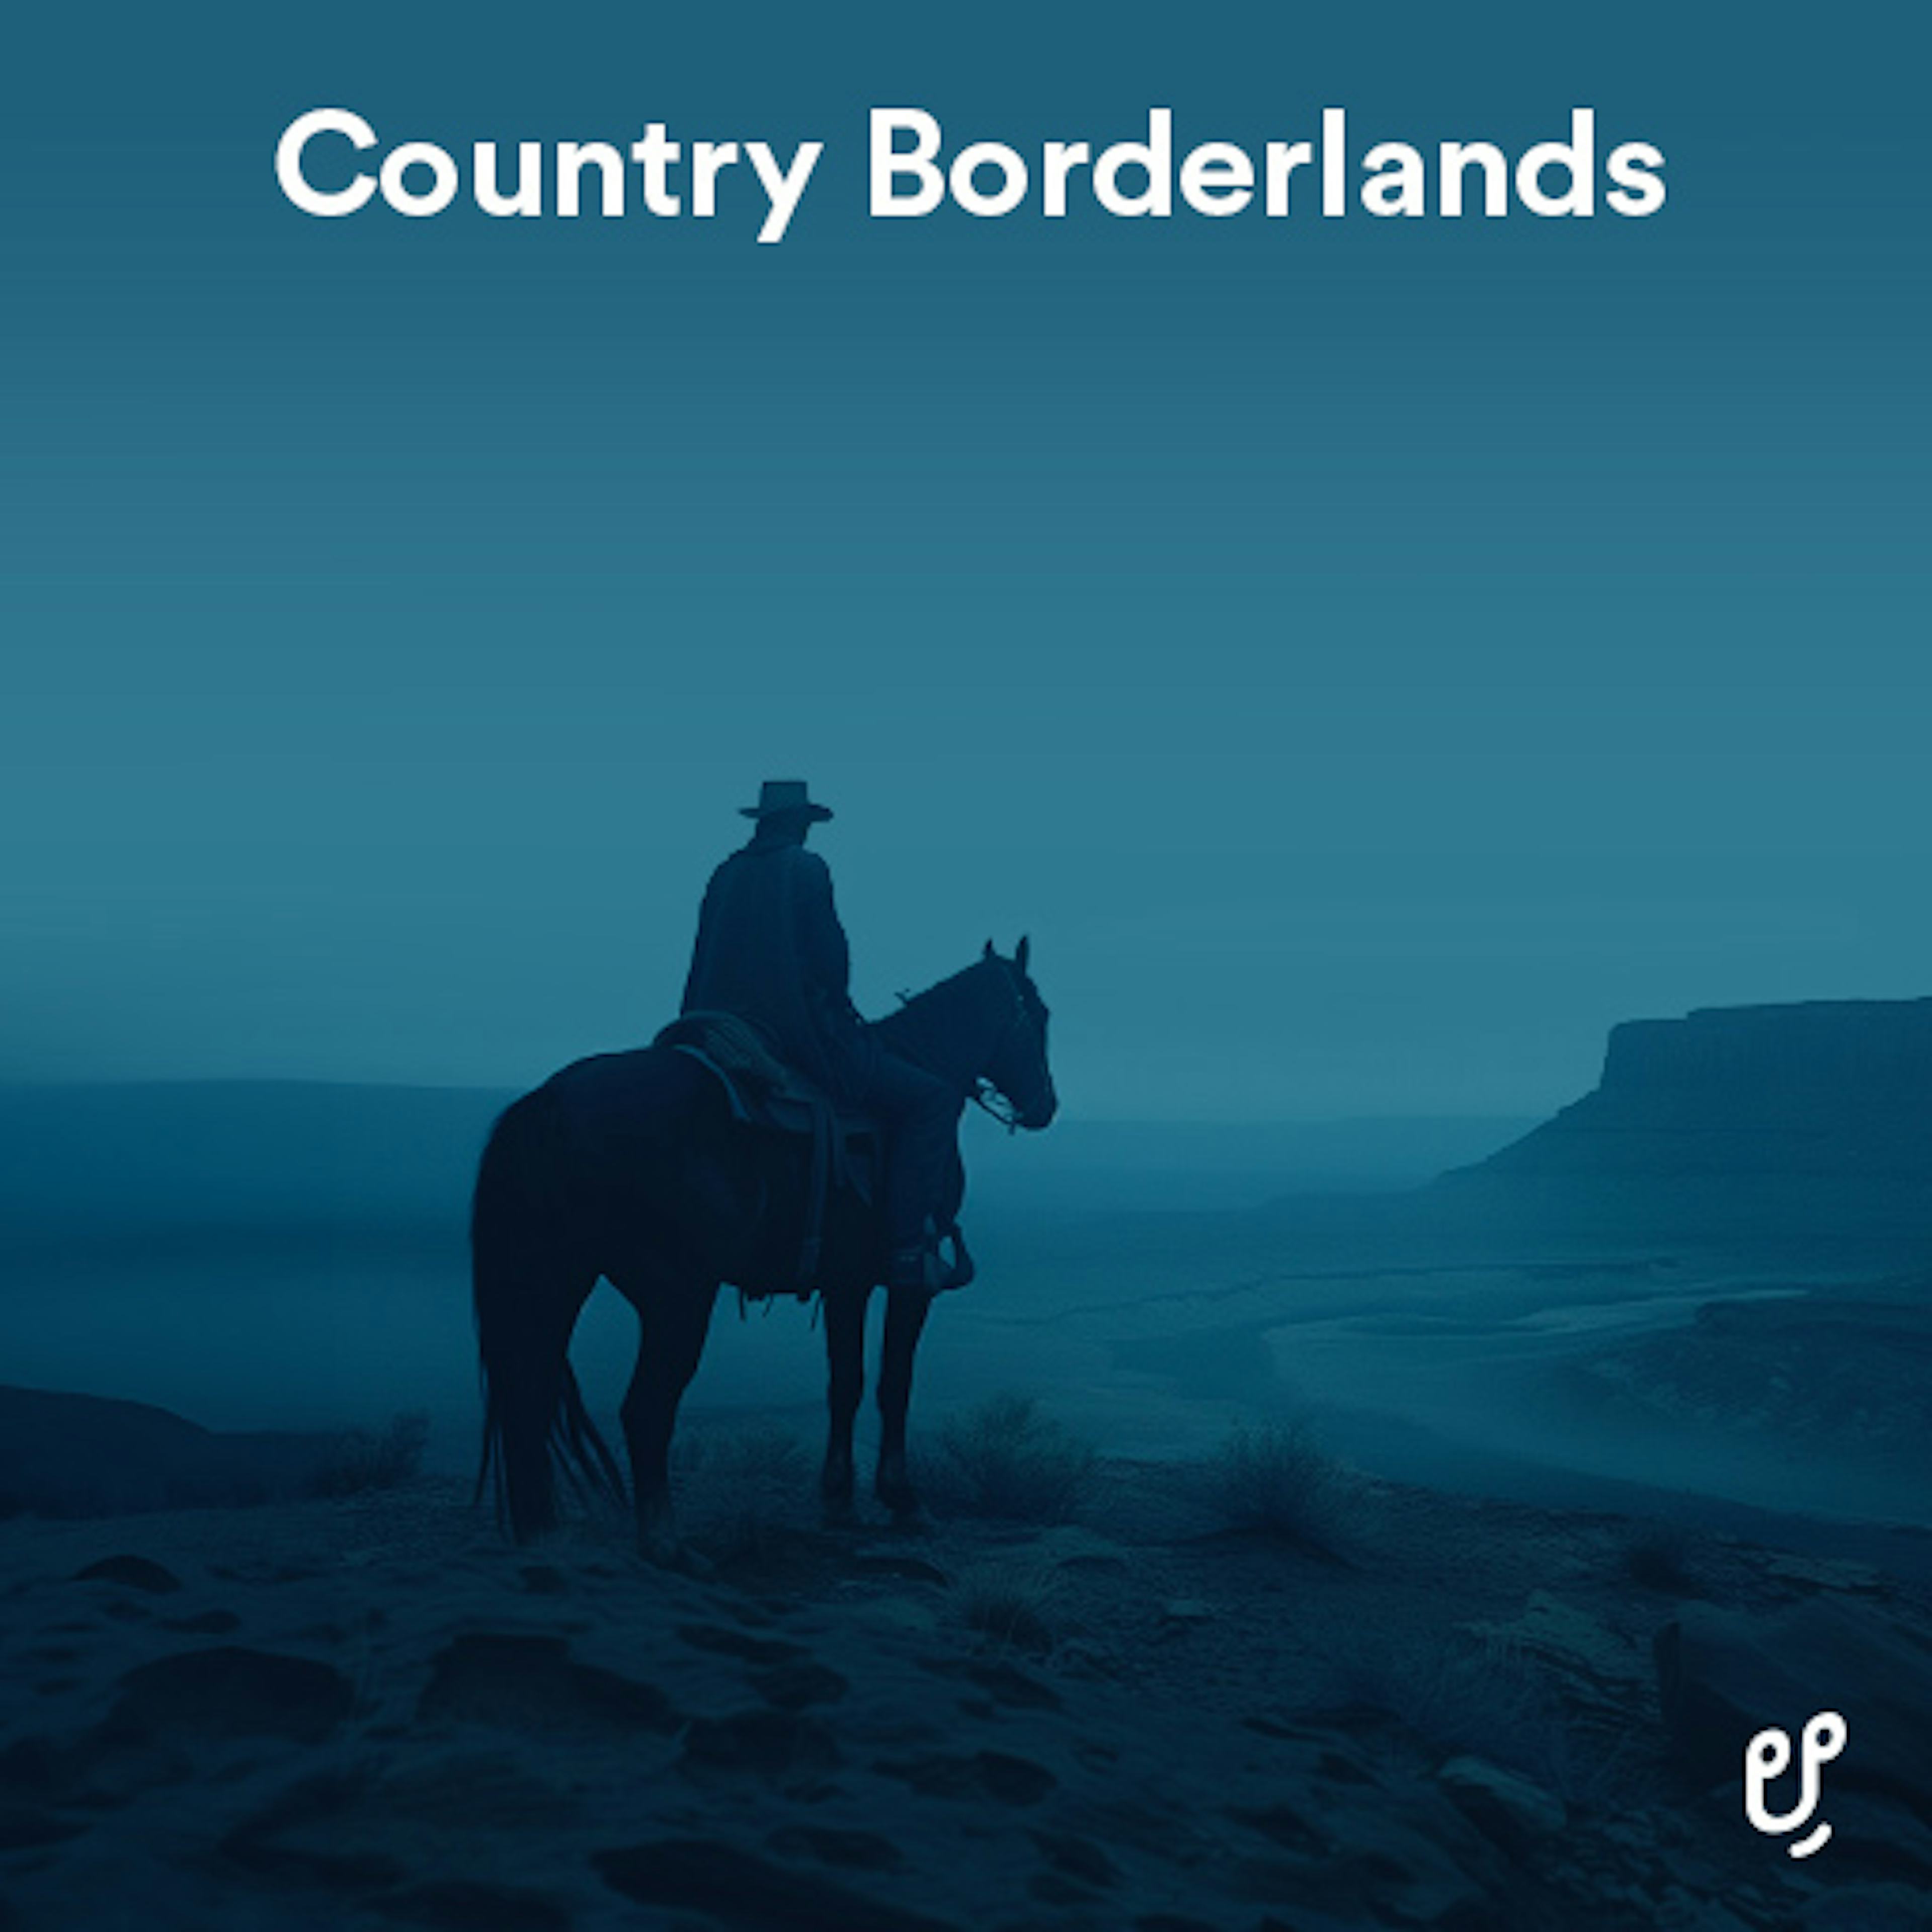 Country Borderlands artwork